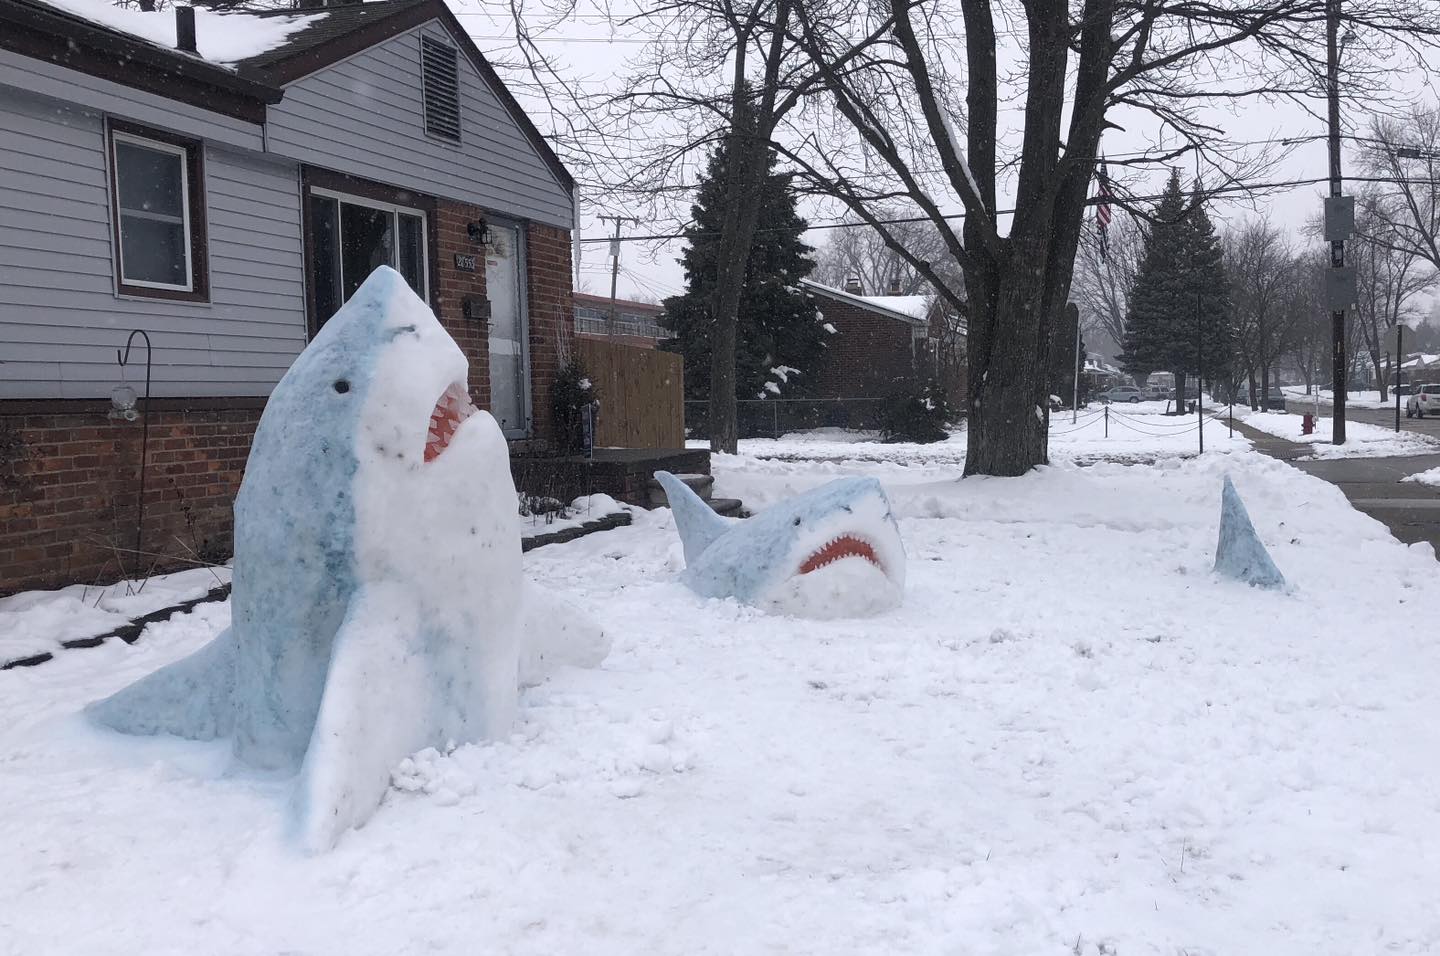 shark snow sculptures by Jennifer Ramirez